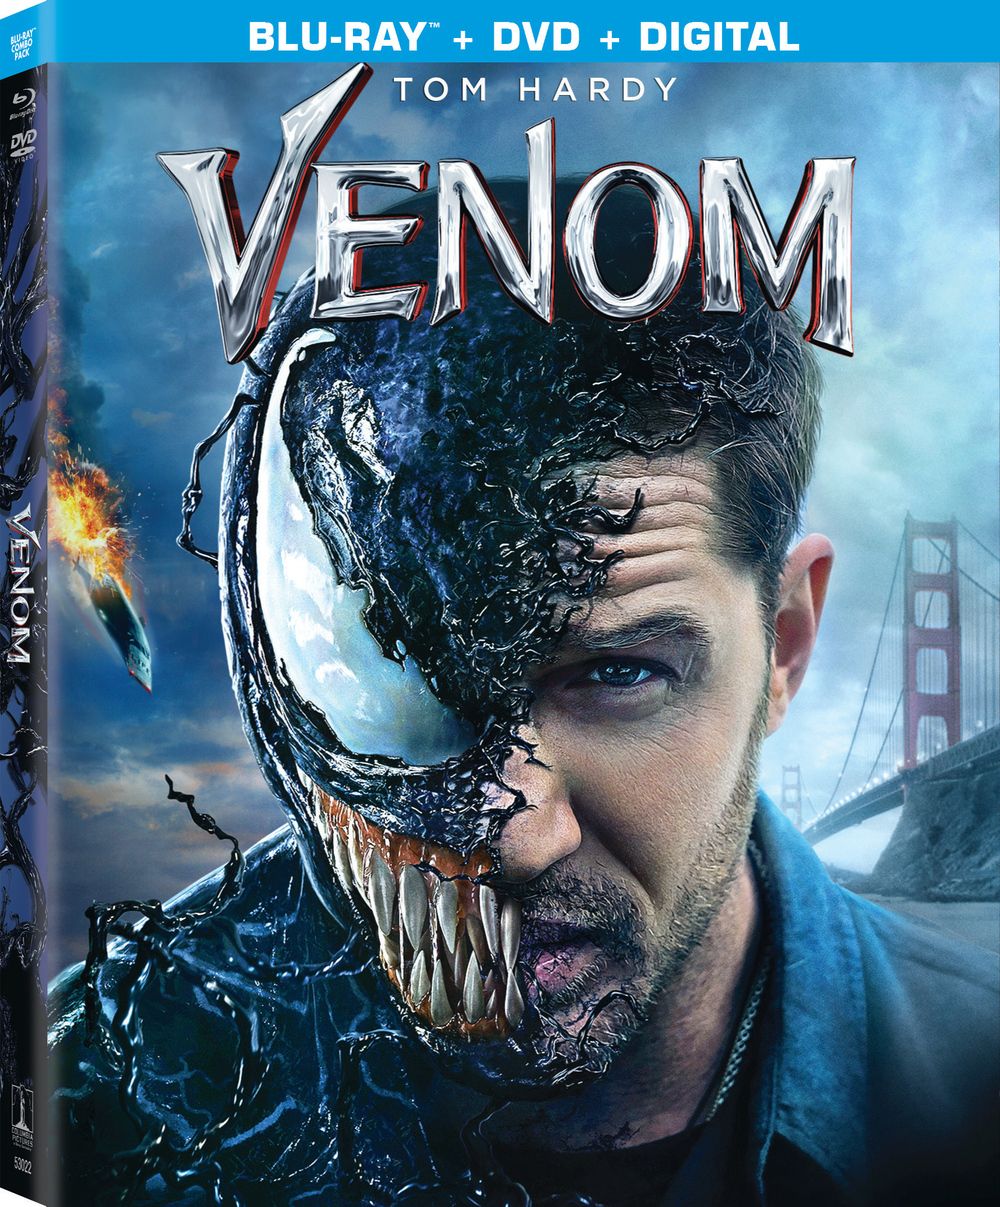 Venom blu-ray 4K Ultra HD cover art